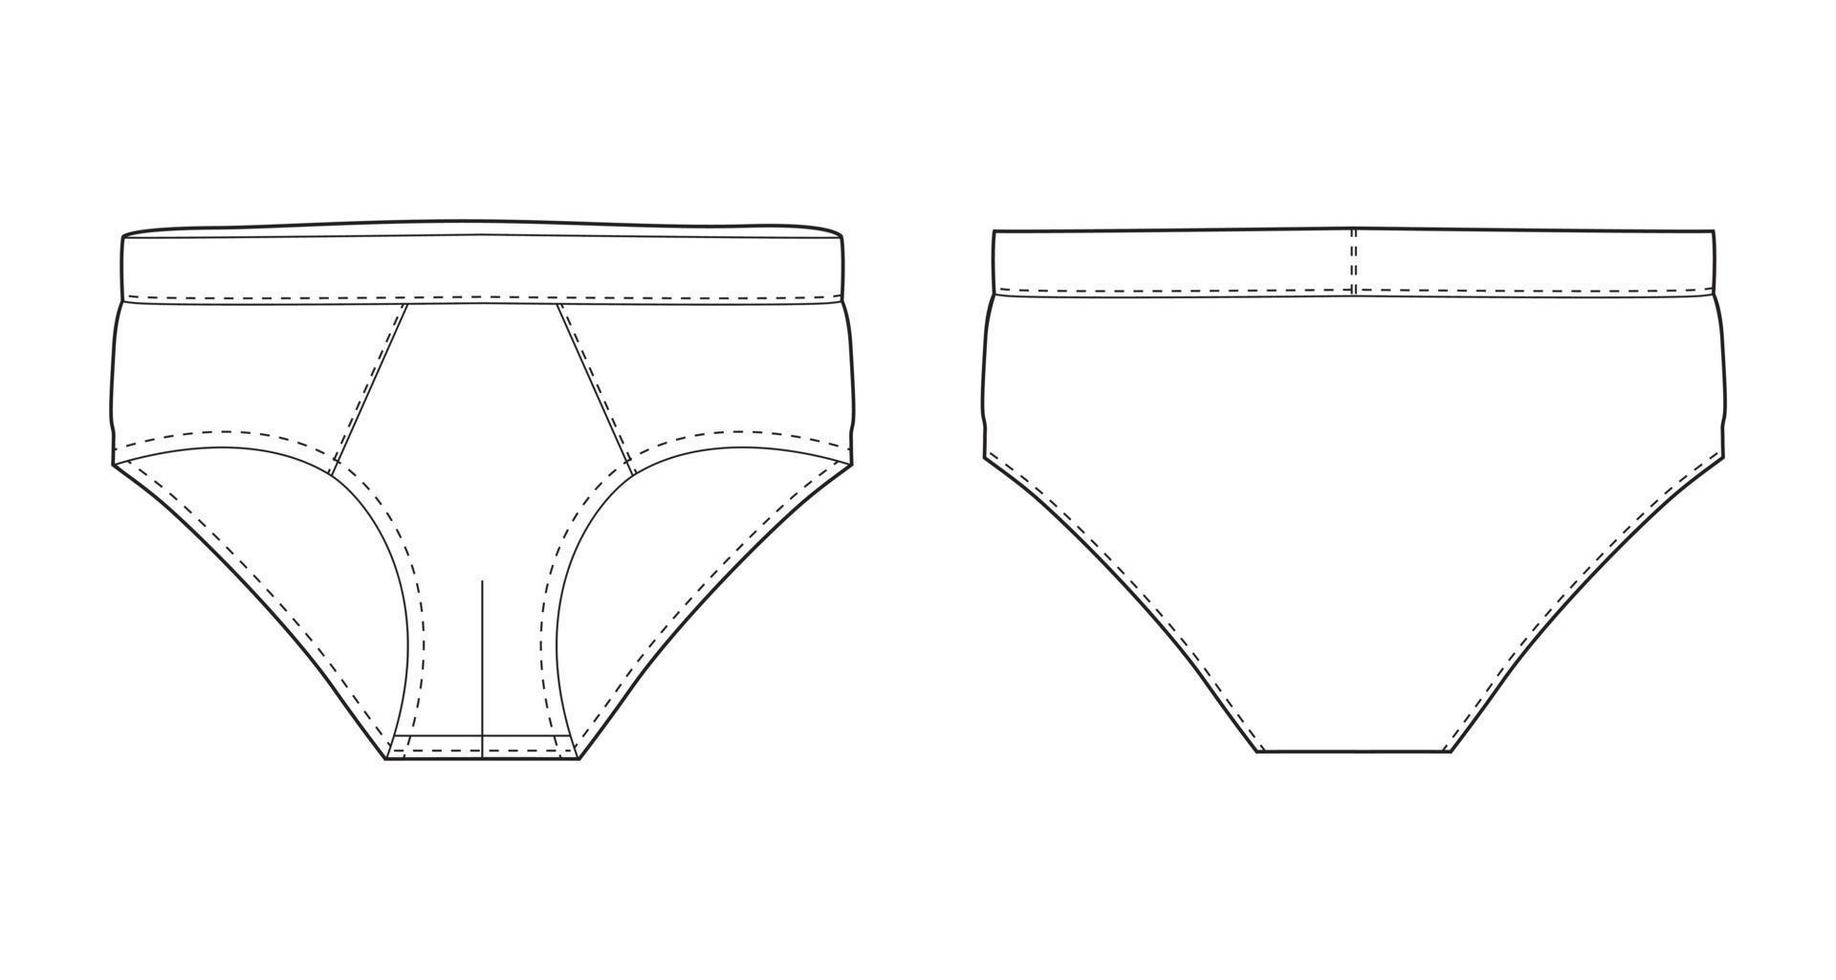 breves pantalones ropa interior dibujo técnico aislado. ilustración vectorial de calzoncillos de hombre. 5626289 en Vecteezy